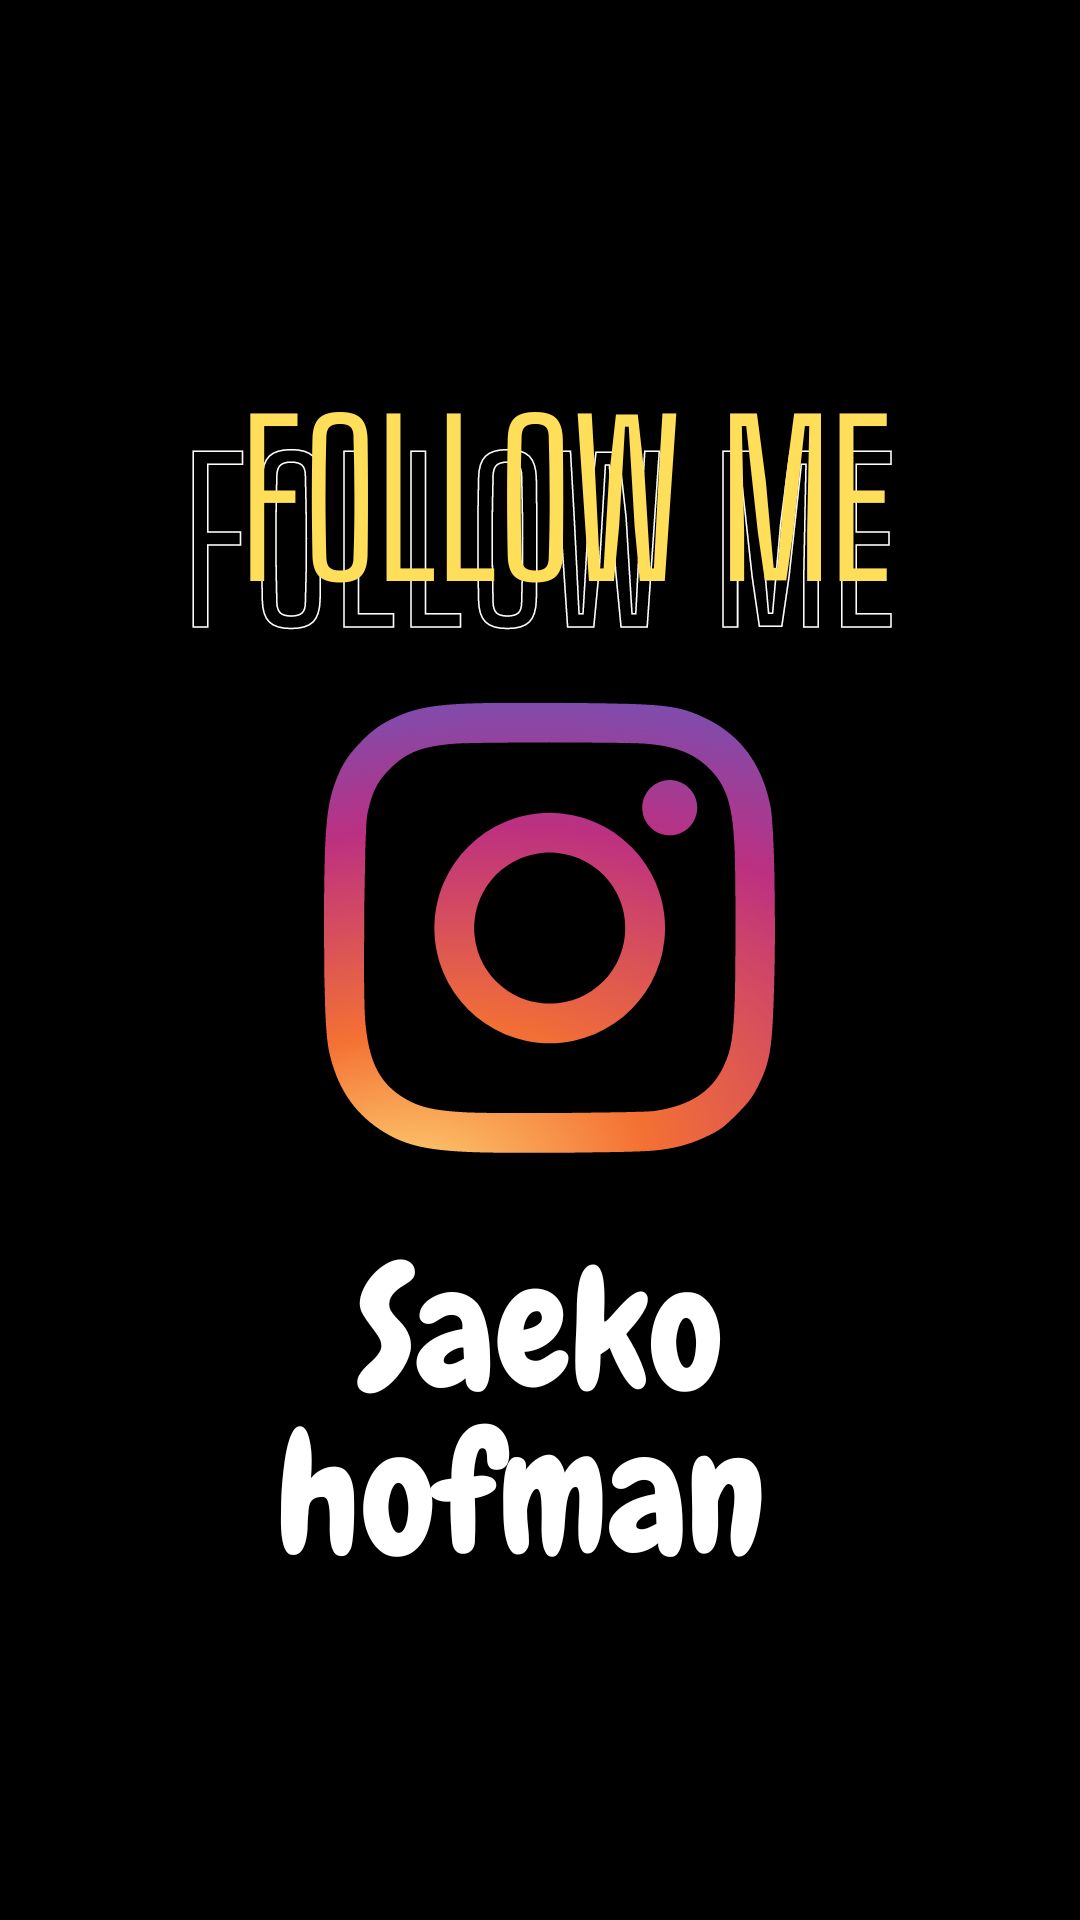 Saekohofman follow me image: 1